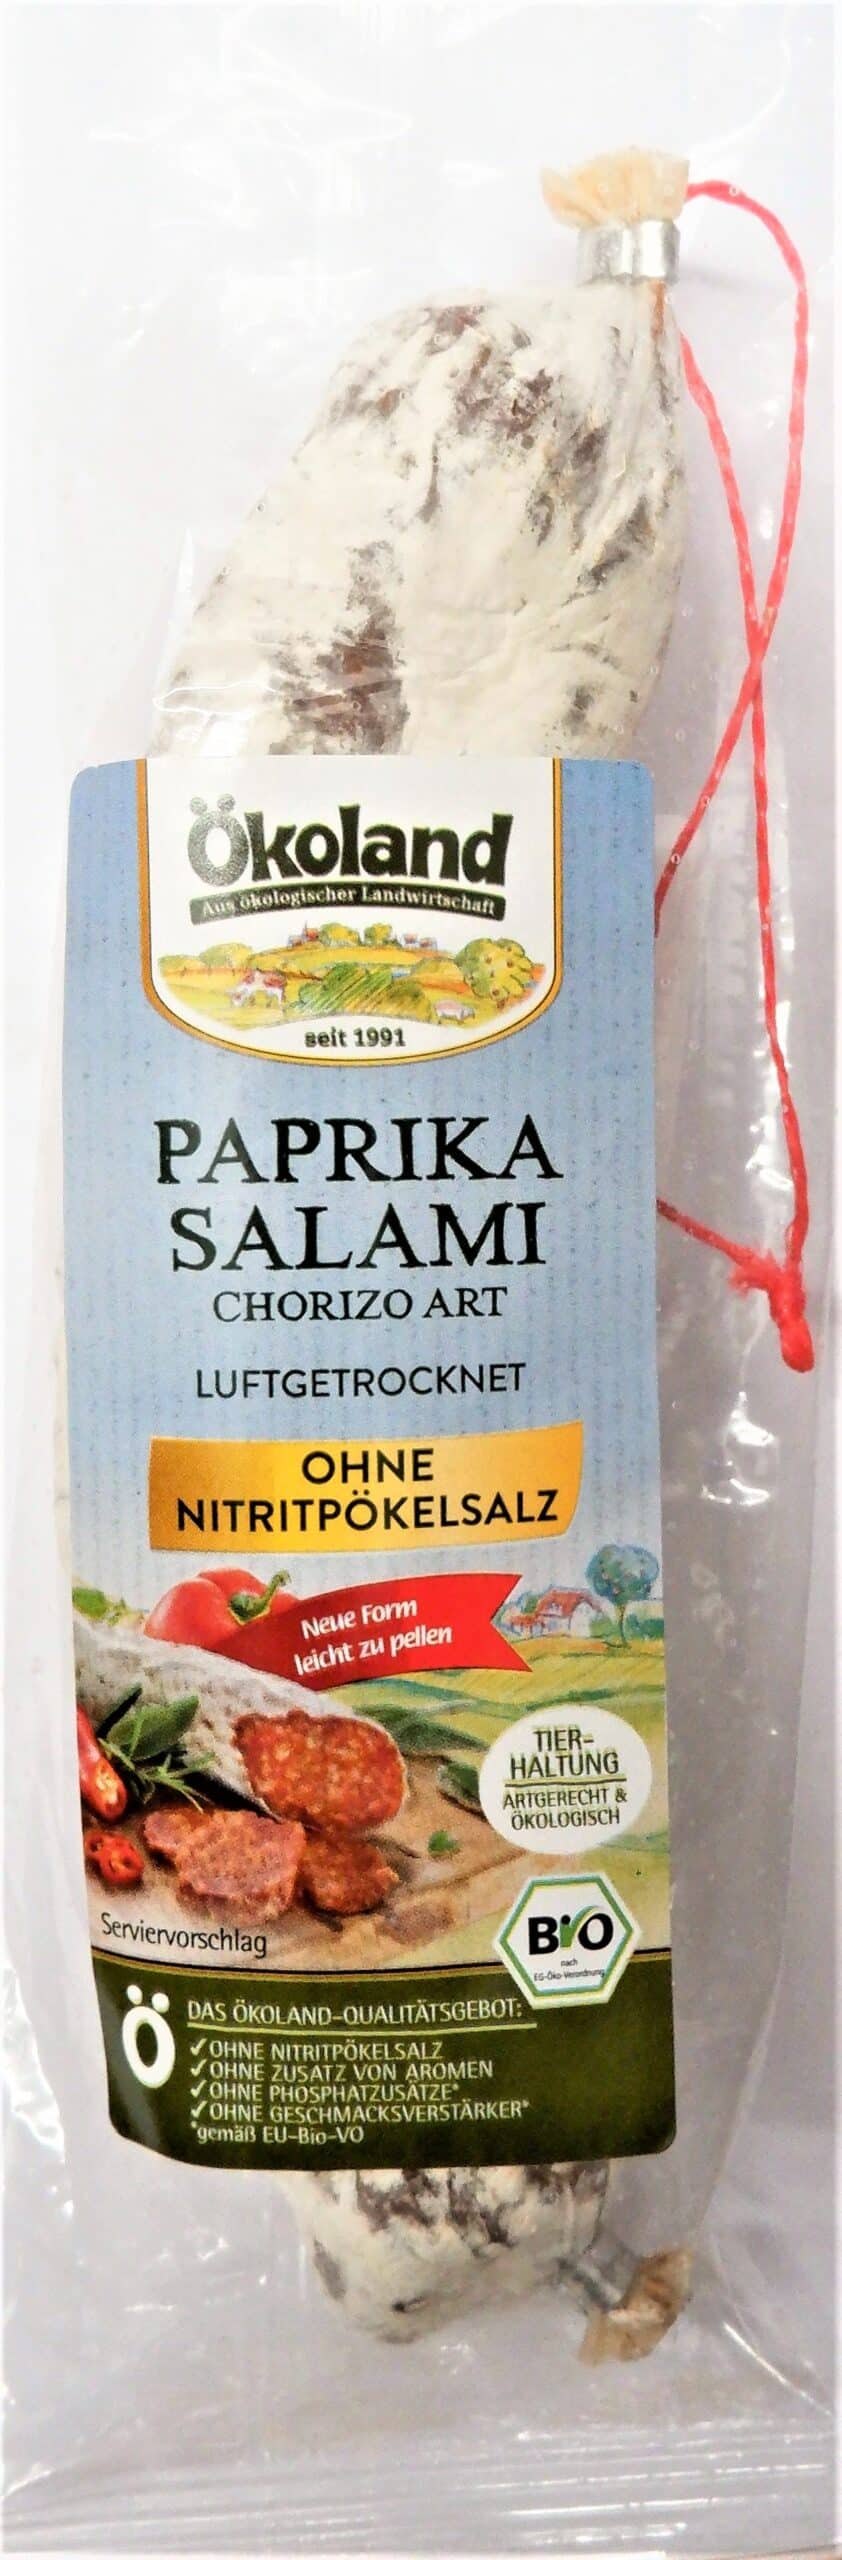 Paprika Salami Chorizo Art luftgetrocknet, edelschimmelgereift